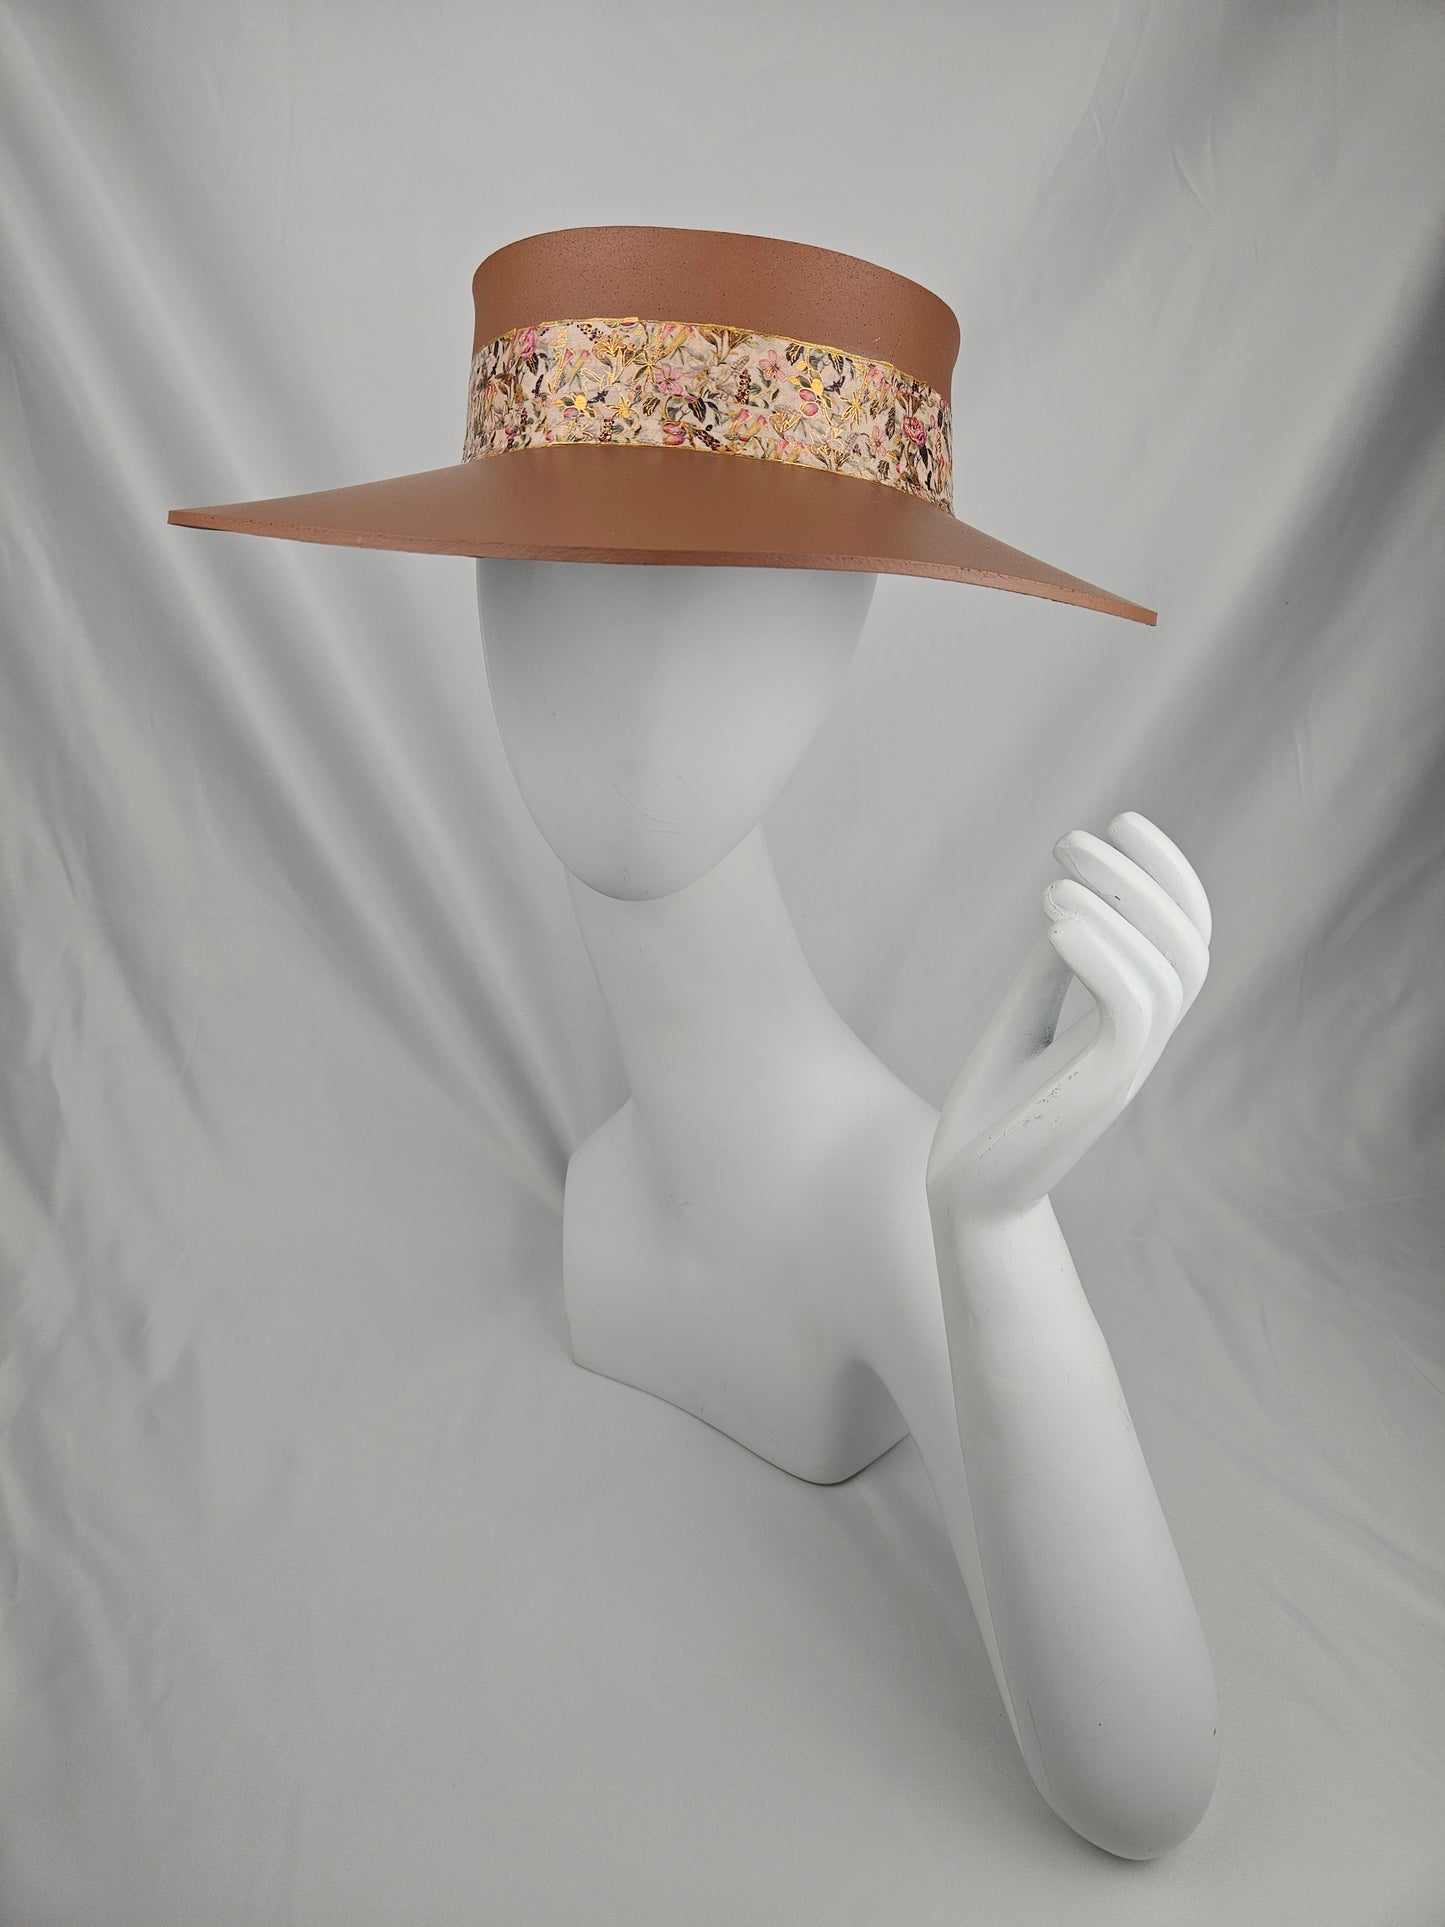 Caramel Brown Audrey Sun Visor Hat with Elegant Pink and Gold Floral Band: UV Resistant, Walks, Brunch, Tea, Golf, Wedding, Church, No Headache, Easter, Pool, Beach, Big Brim